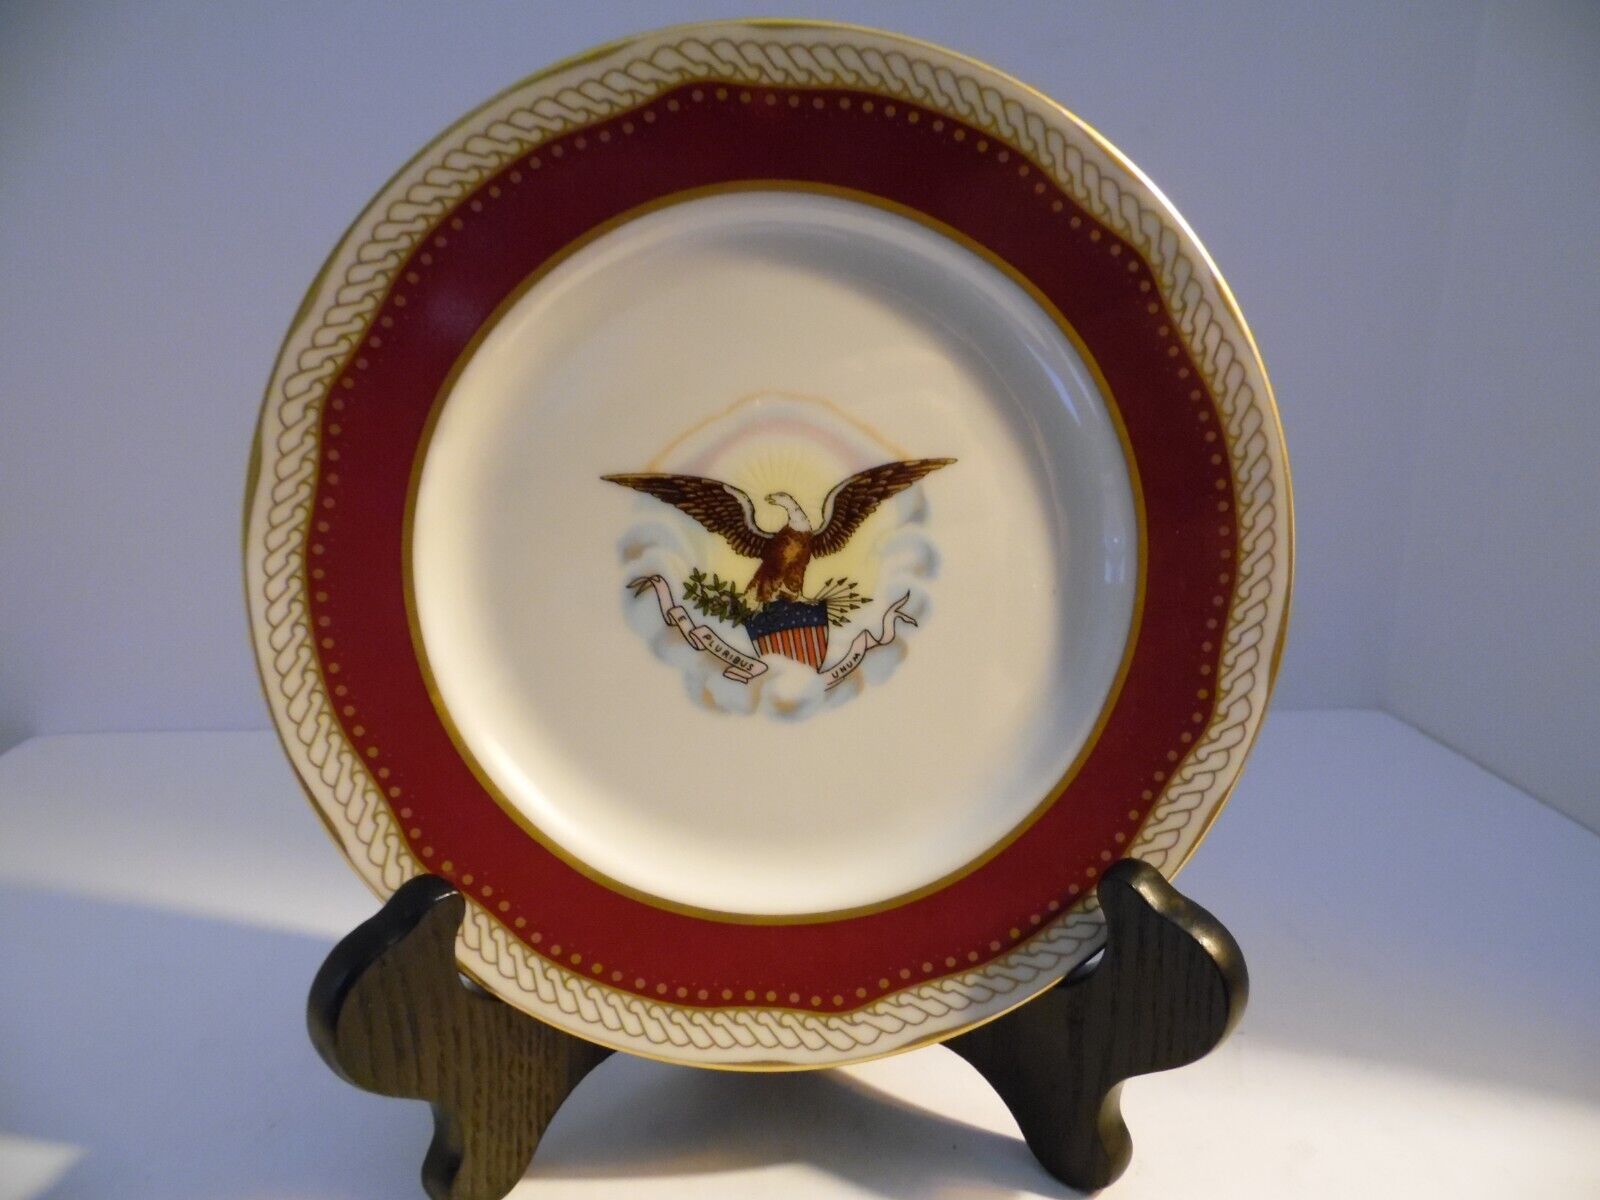 White House China Woodmere China Dessert Plate Abraham Lincoln